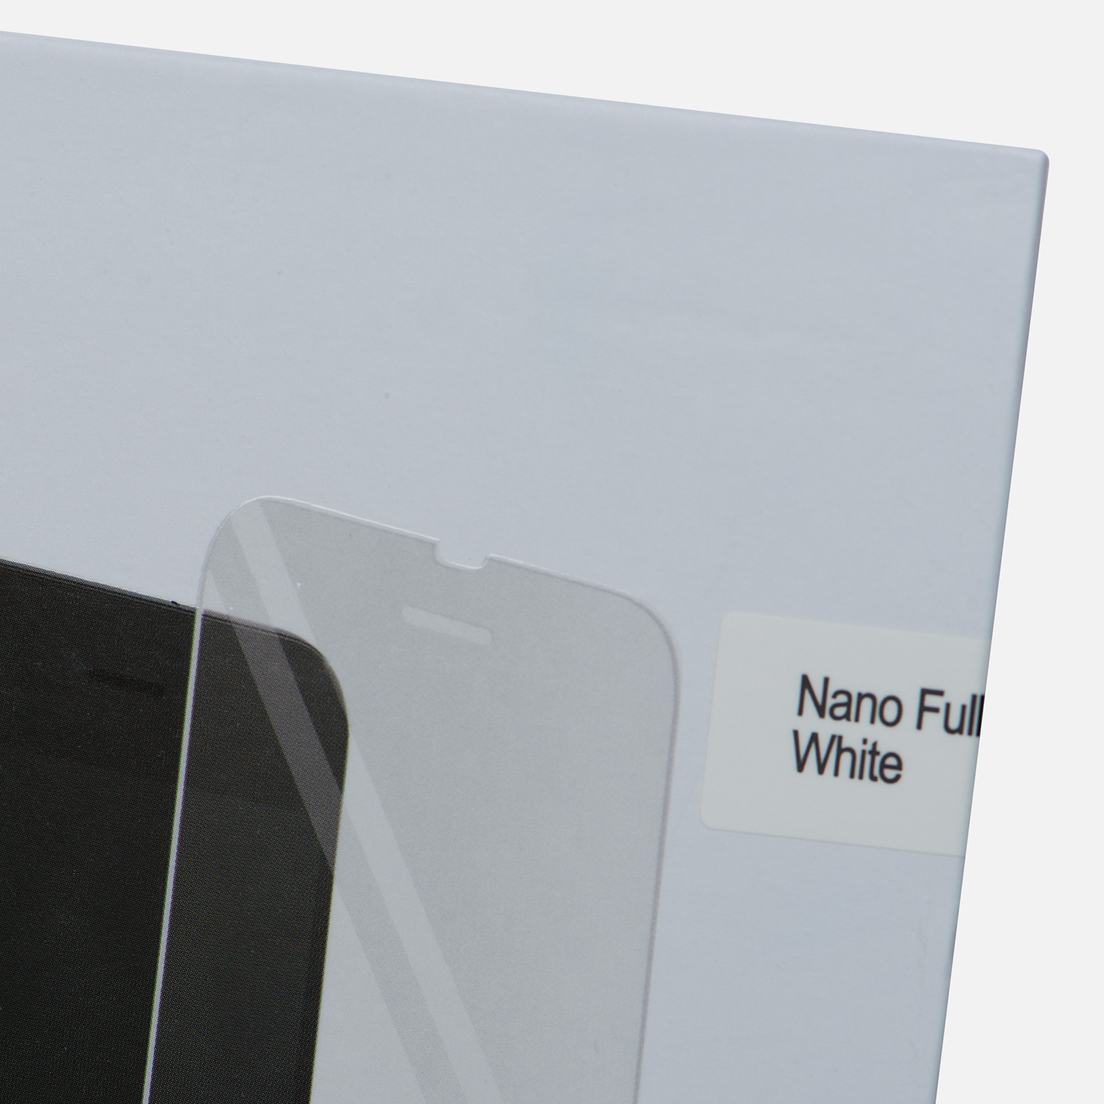 uBear Защитное стекло Nano Full Cover iPhone 7 Plus Premium 0.3mm